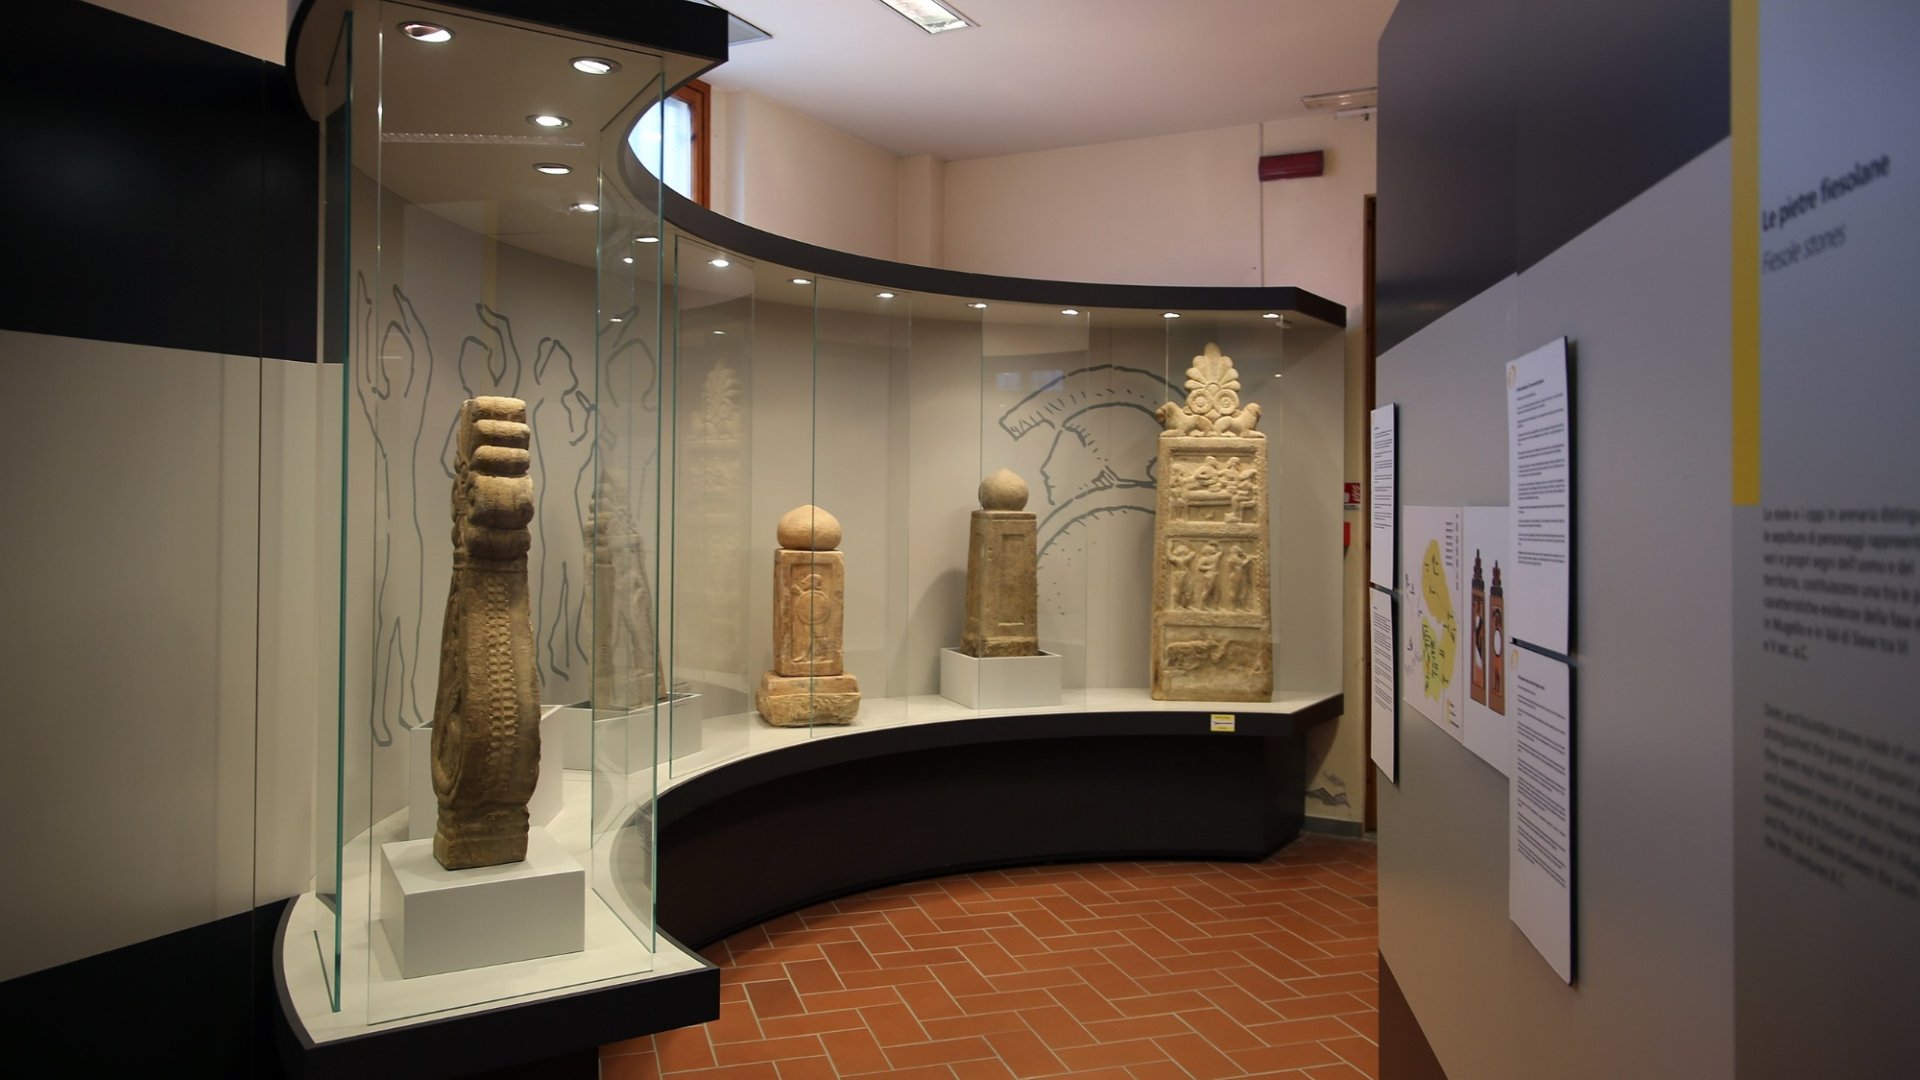 Dicomano Archaeological Museum